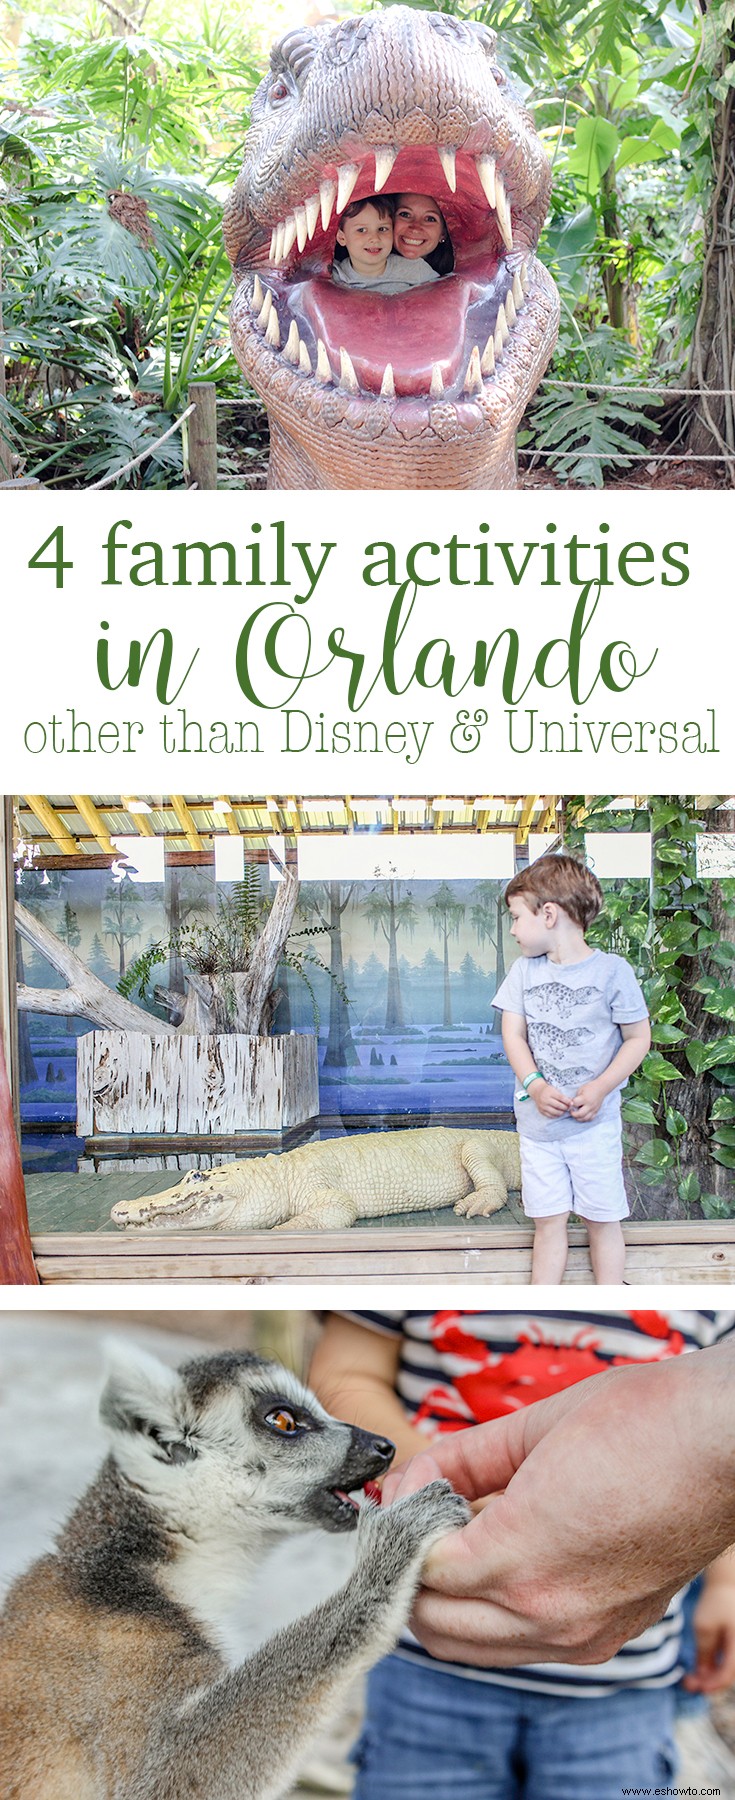 4 actividades familiares en Orlando que no son de Disney o Universal 